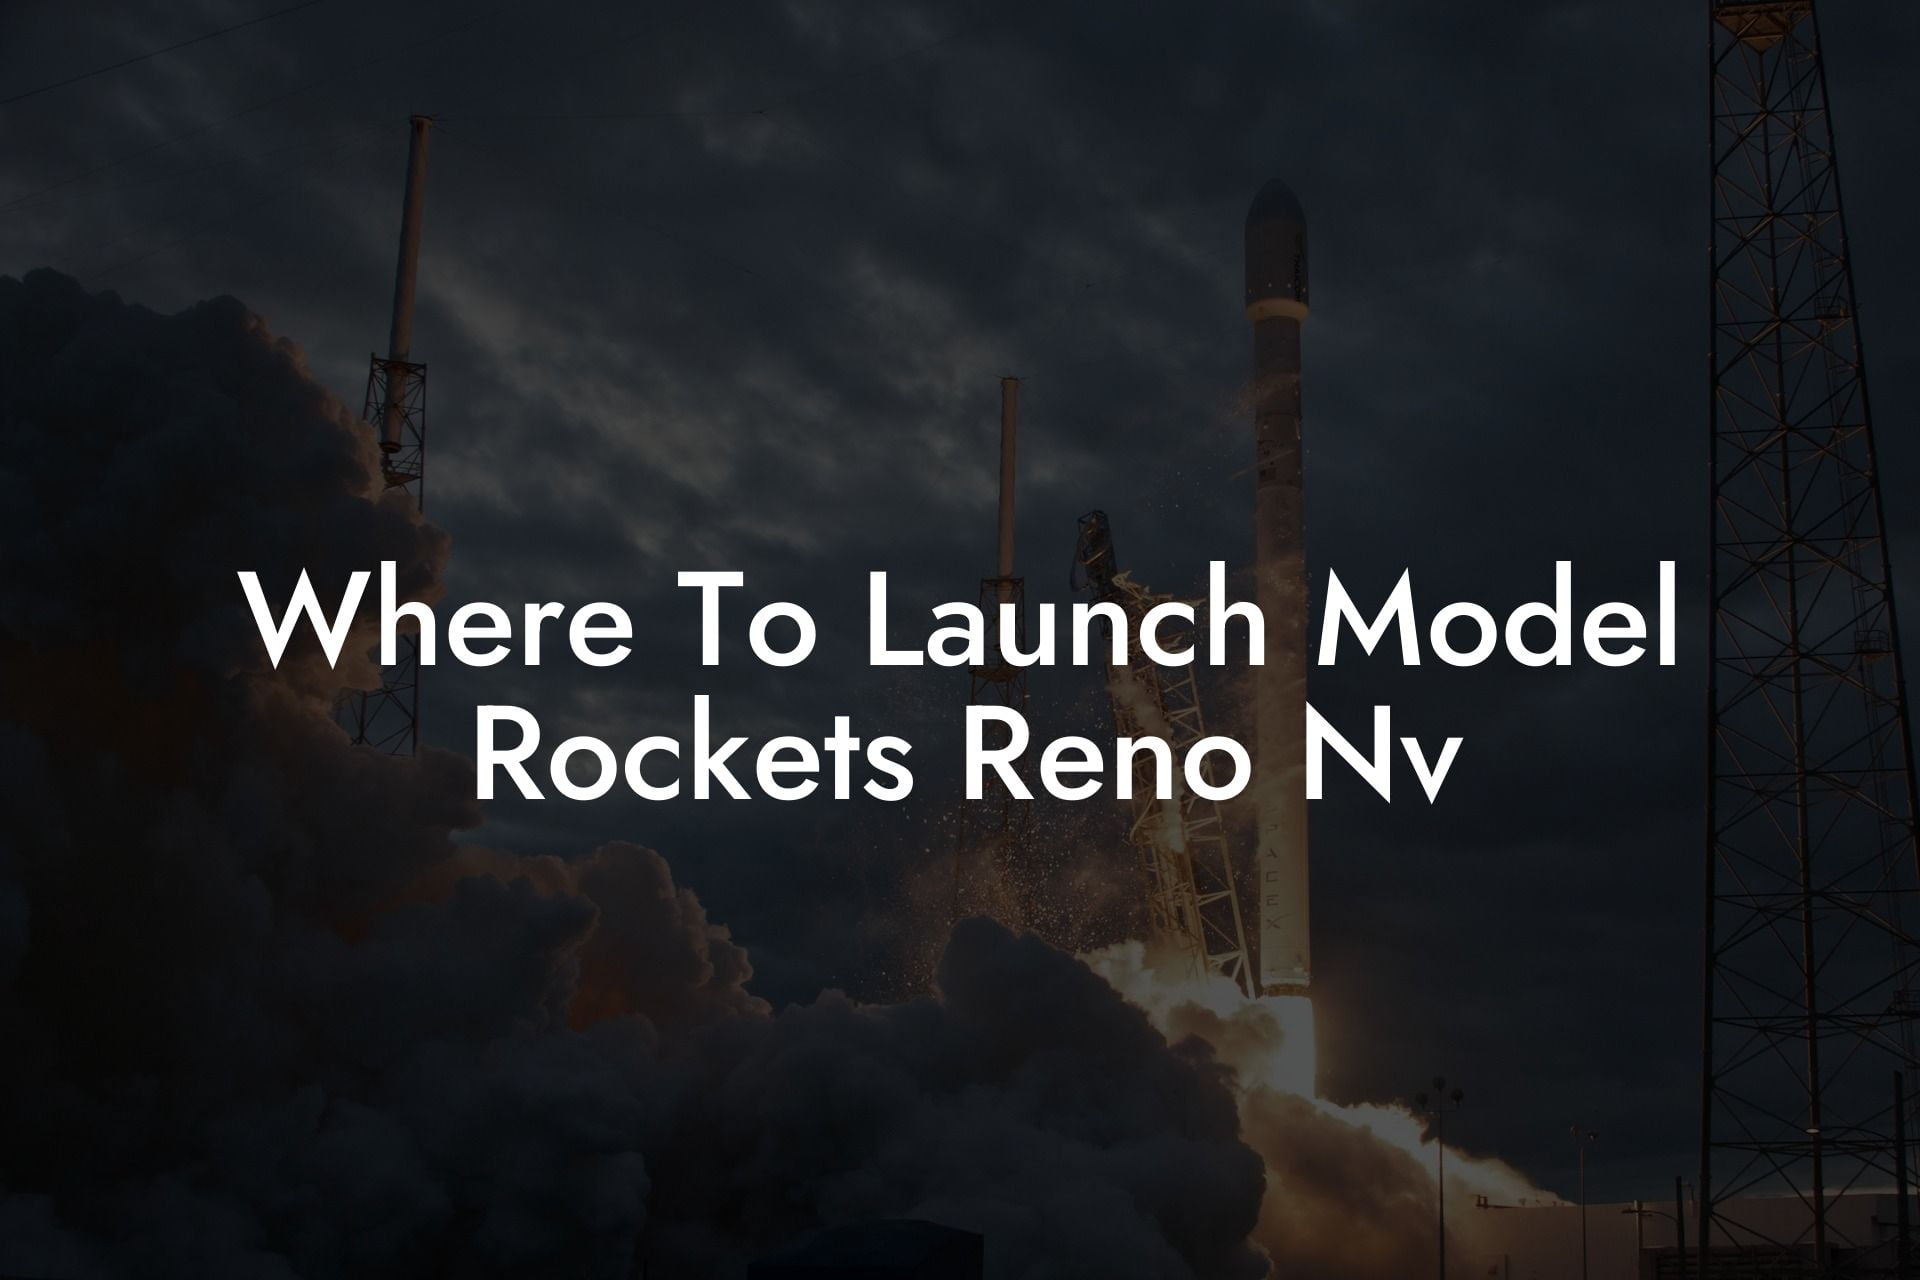 Where To Launch Model Rockets Reno Nv